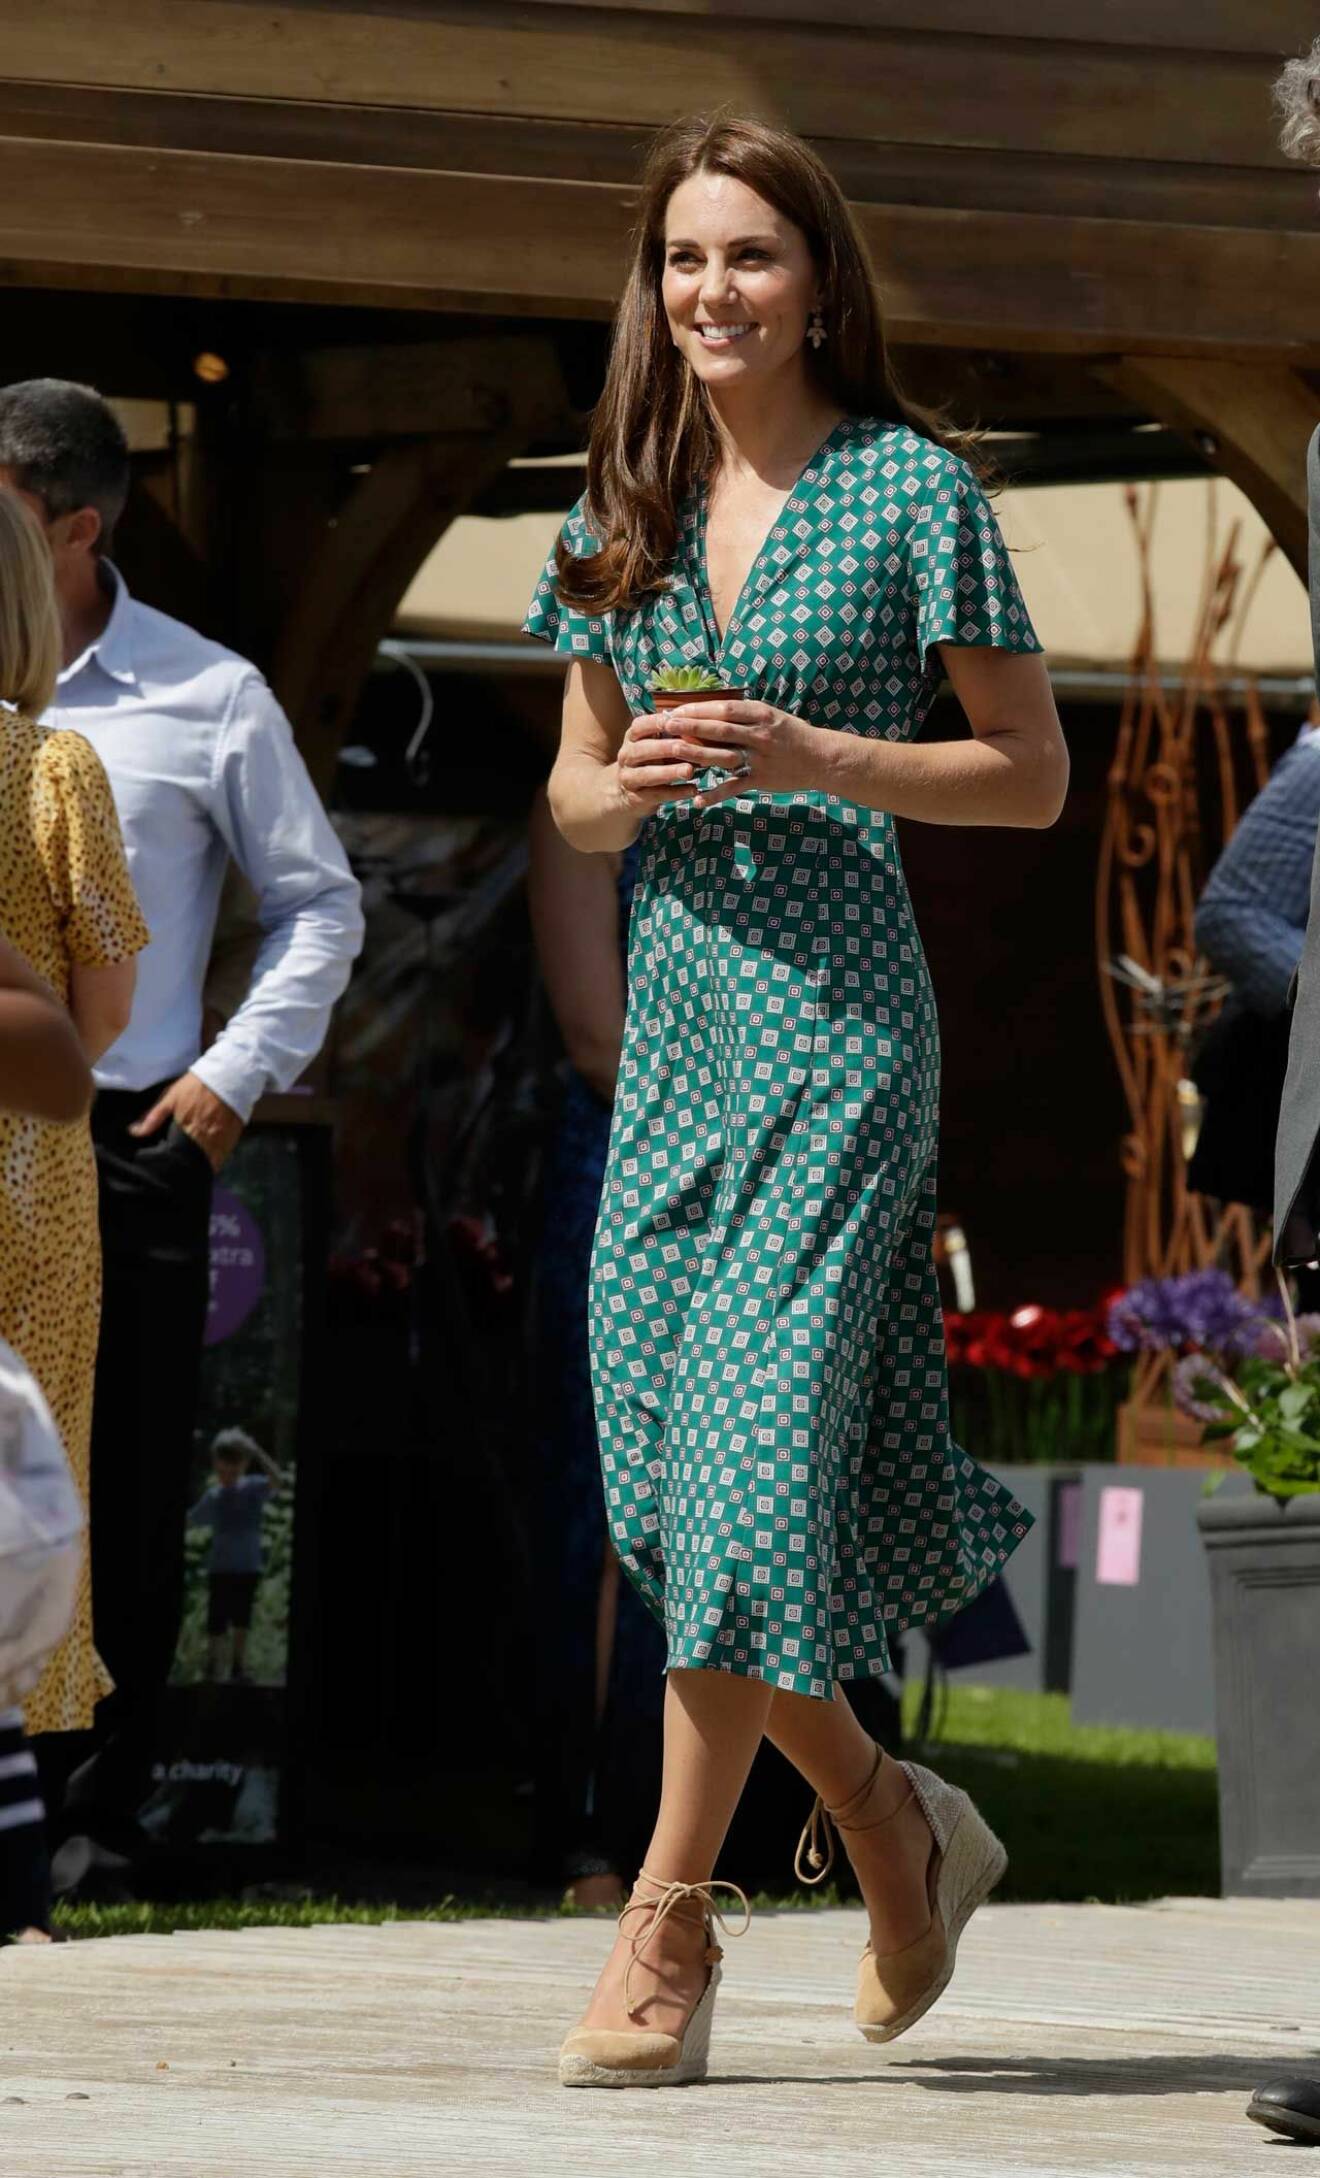 Kate i grön klänning